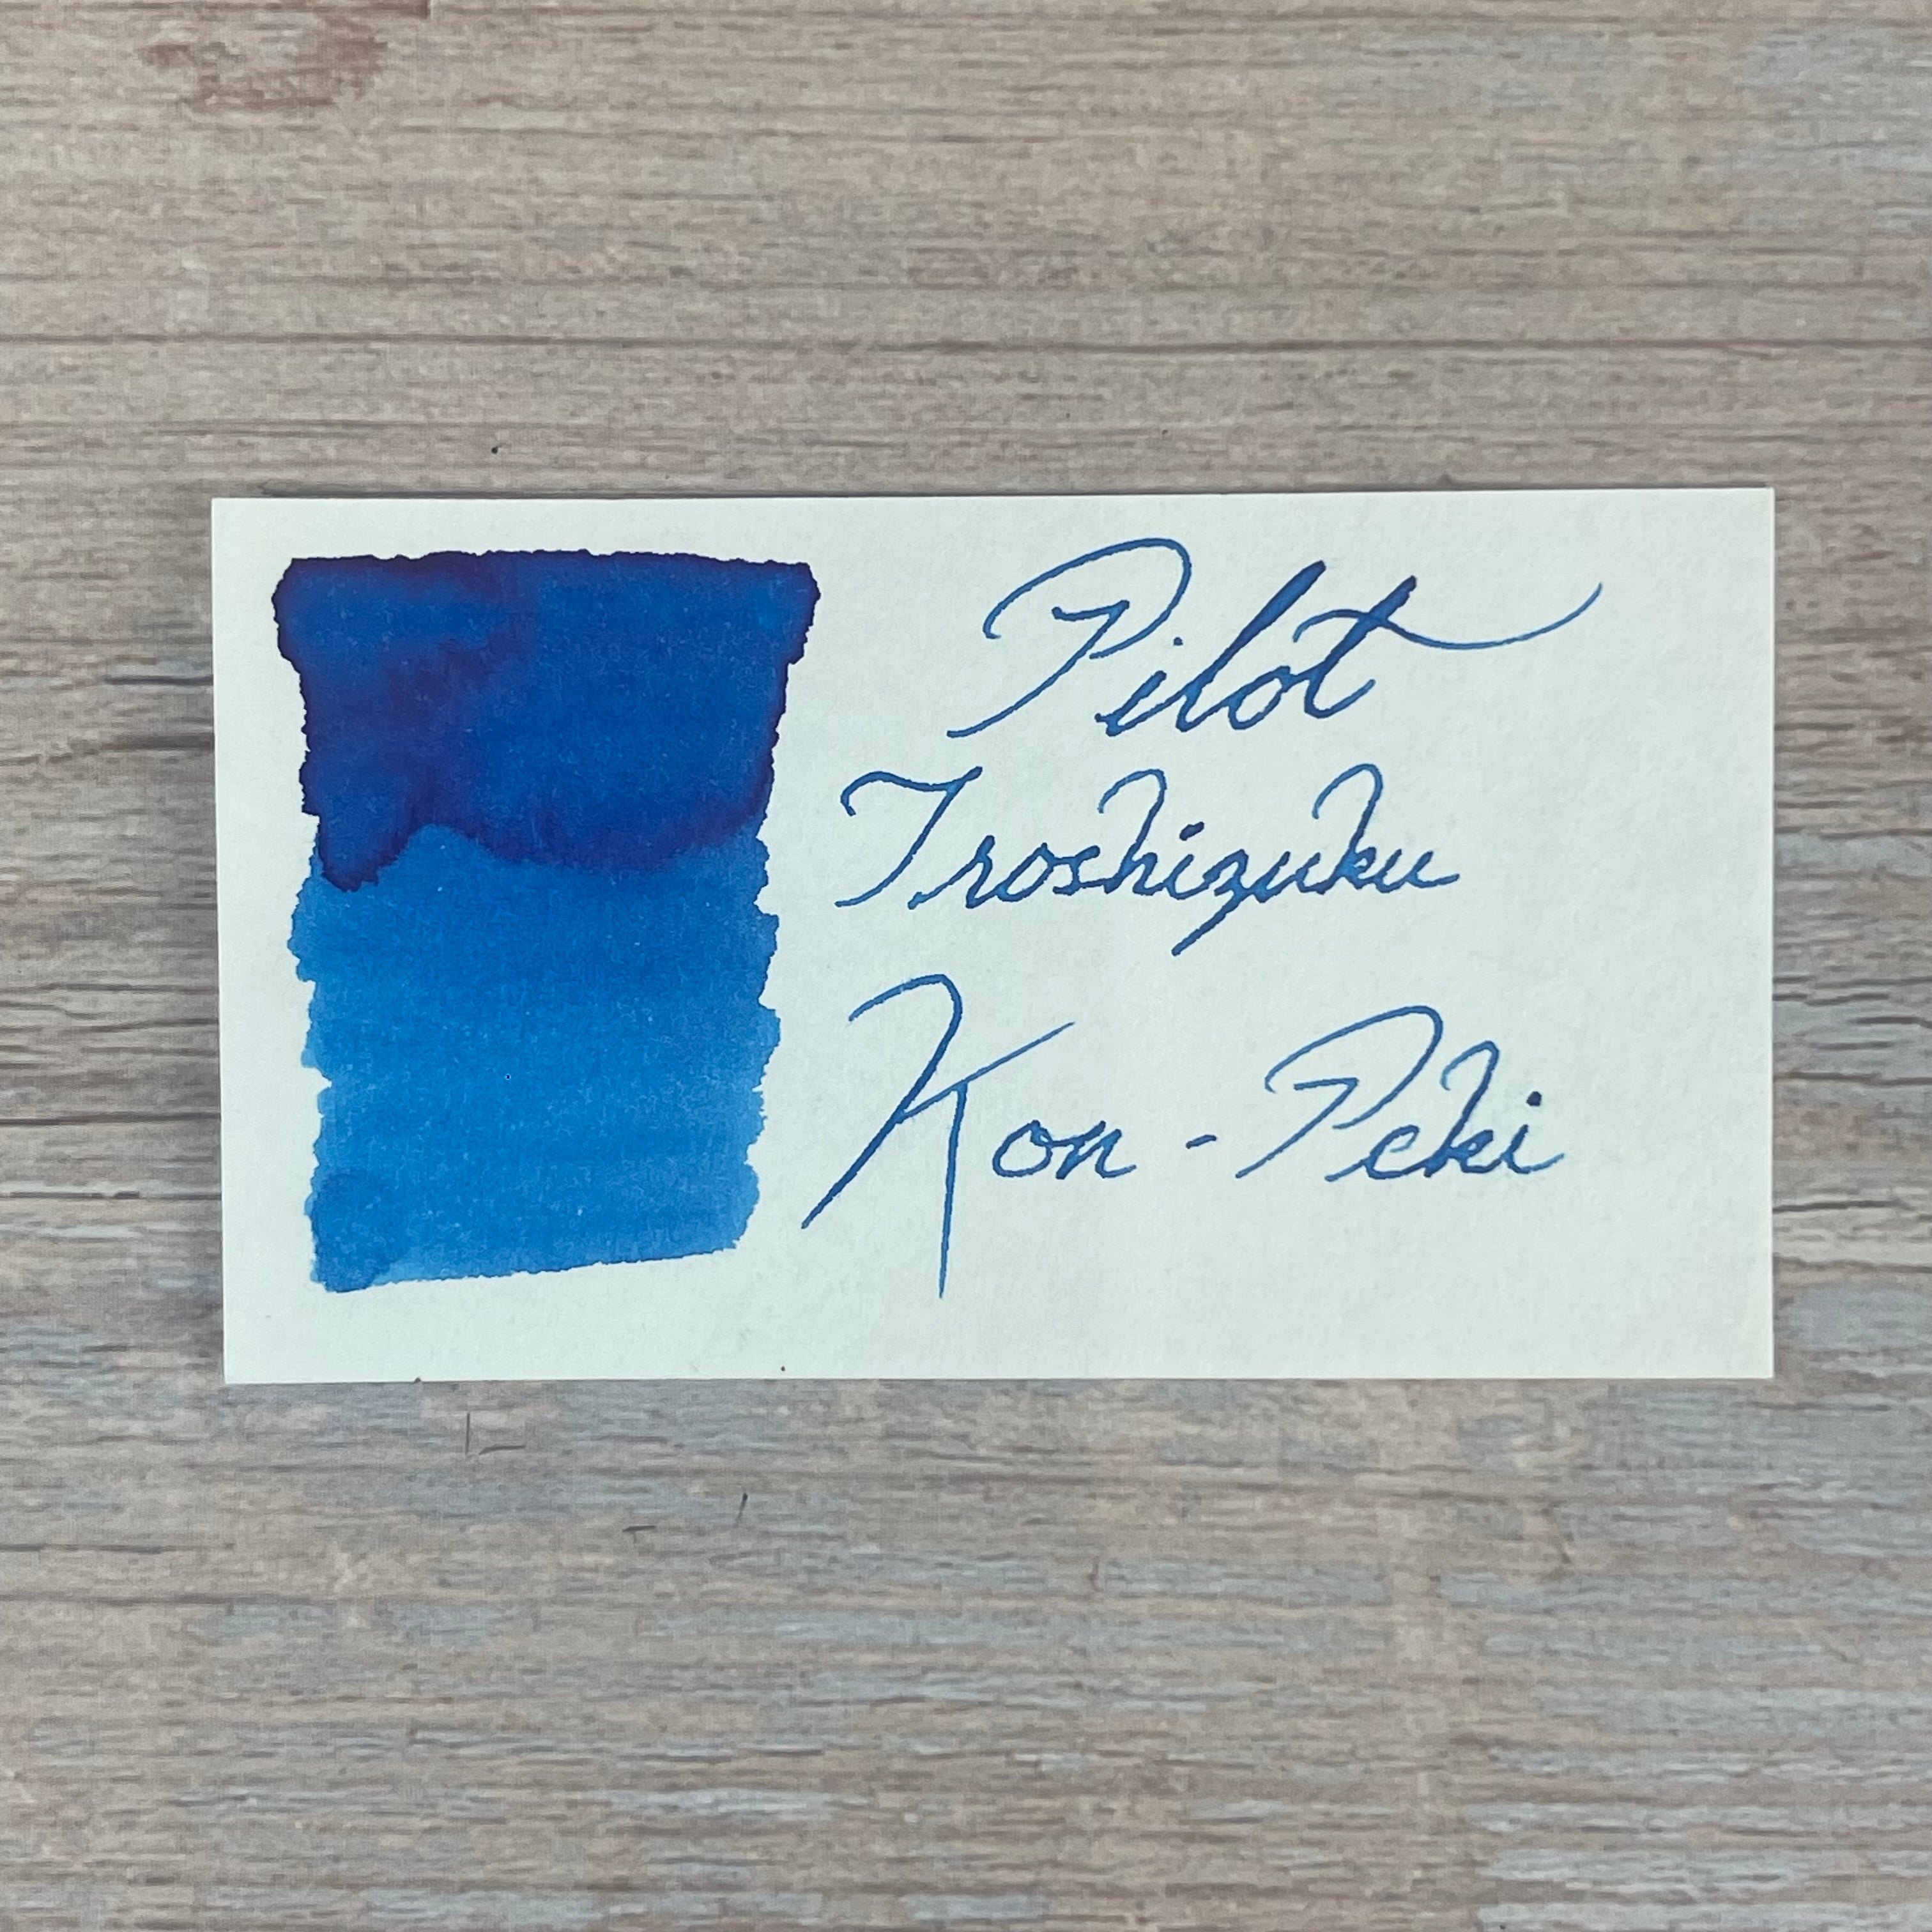  PILOT Iroshizuku Bottled Fountain Pen Ink, Kon-Peki, Deep Blue  (Turquoise Blue) 50ML Bottle (69212) : Pilot Mr Metropolitan Collection :  Office Products